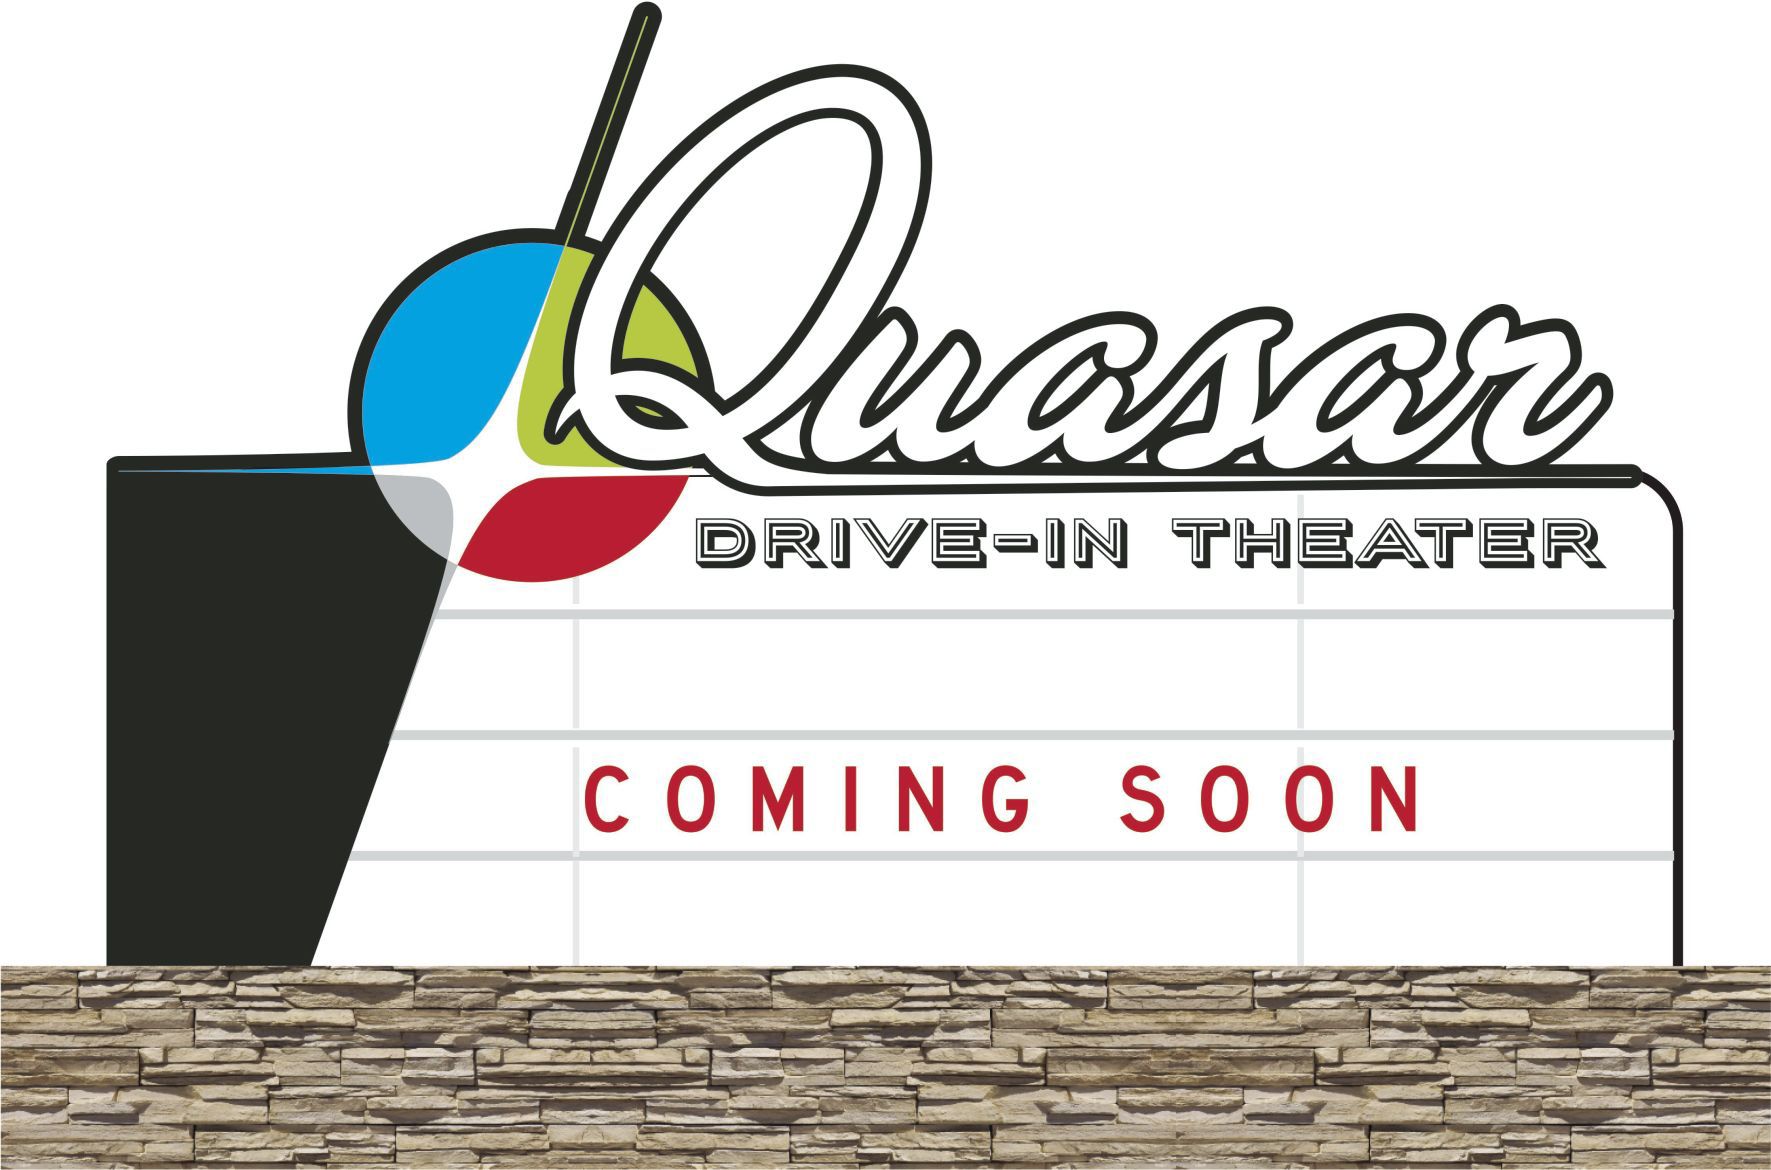 quasar drive in theater